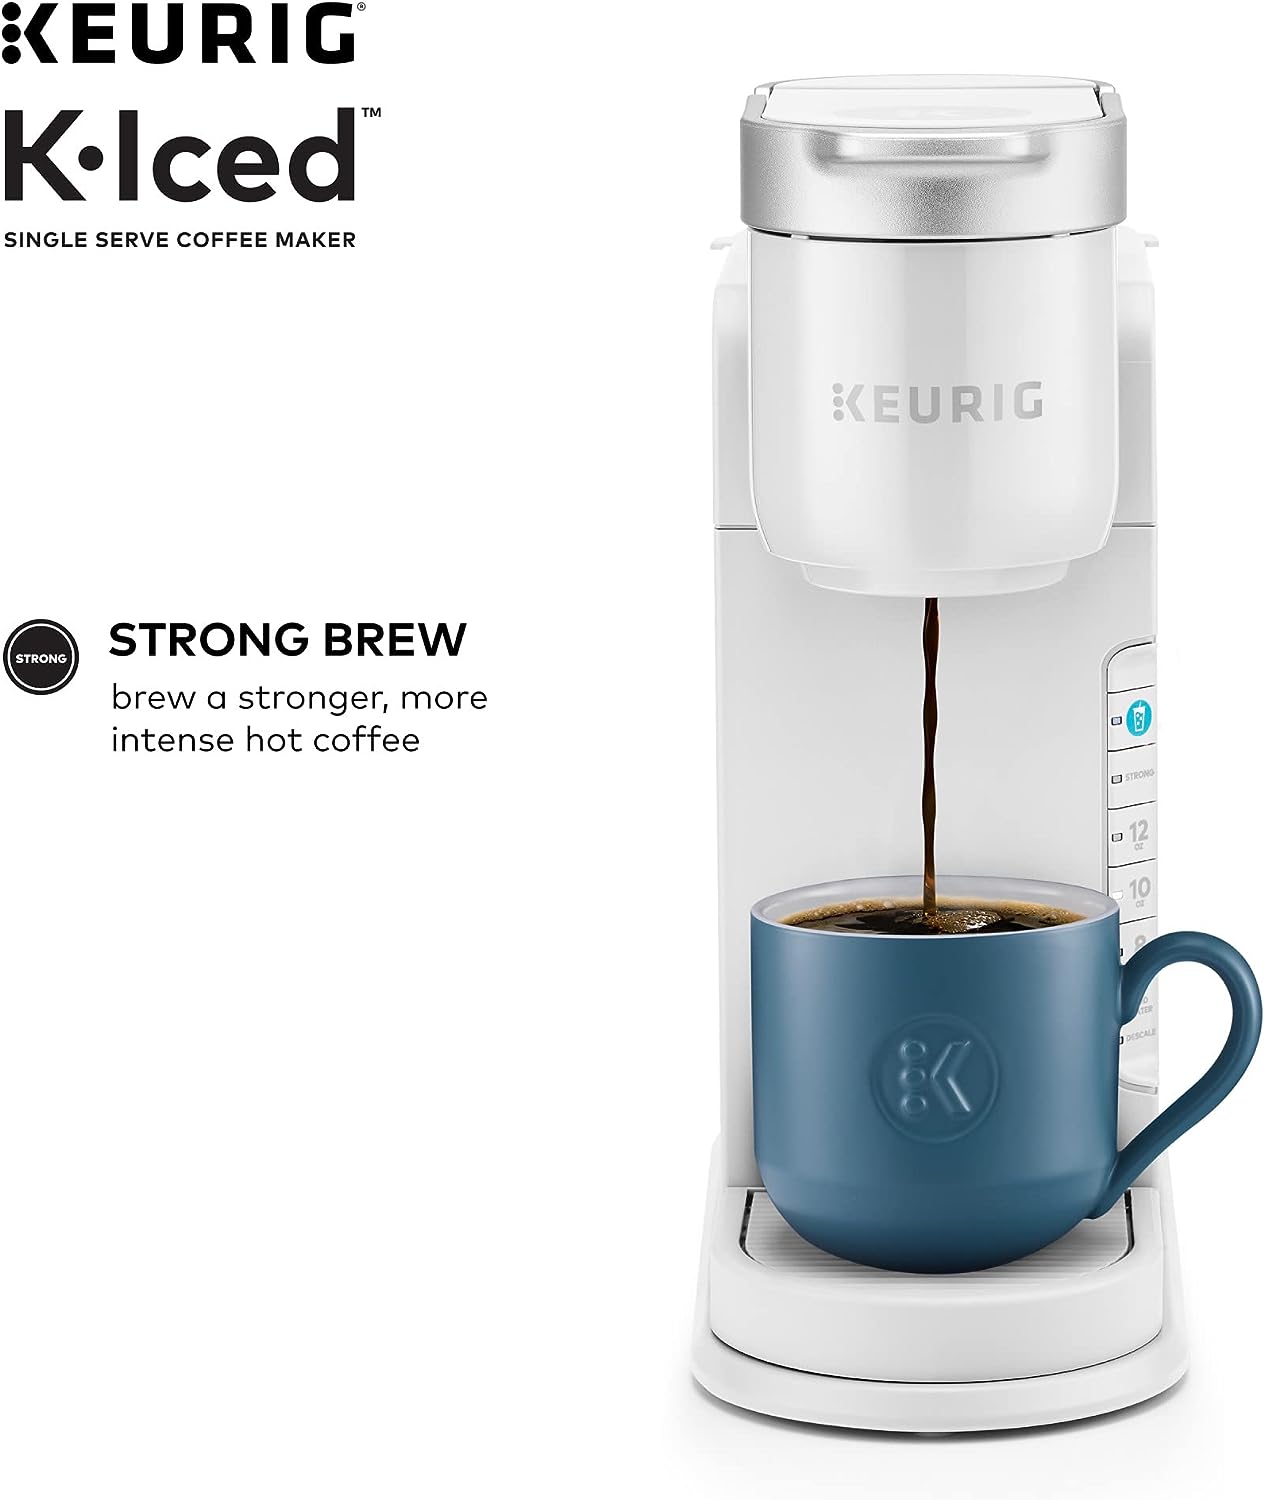 Keurig K-Iced Single Serve Coffee Maker Review